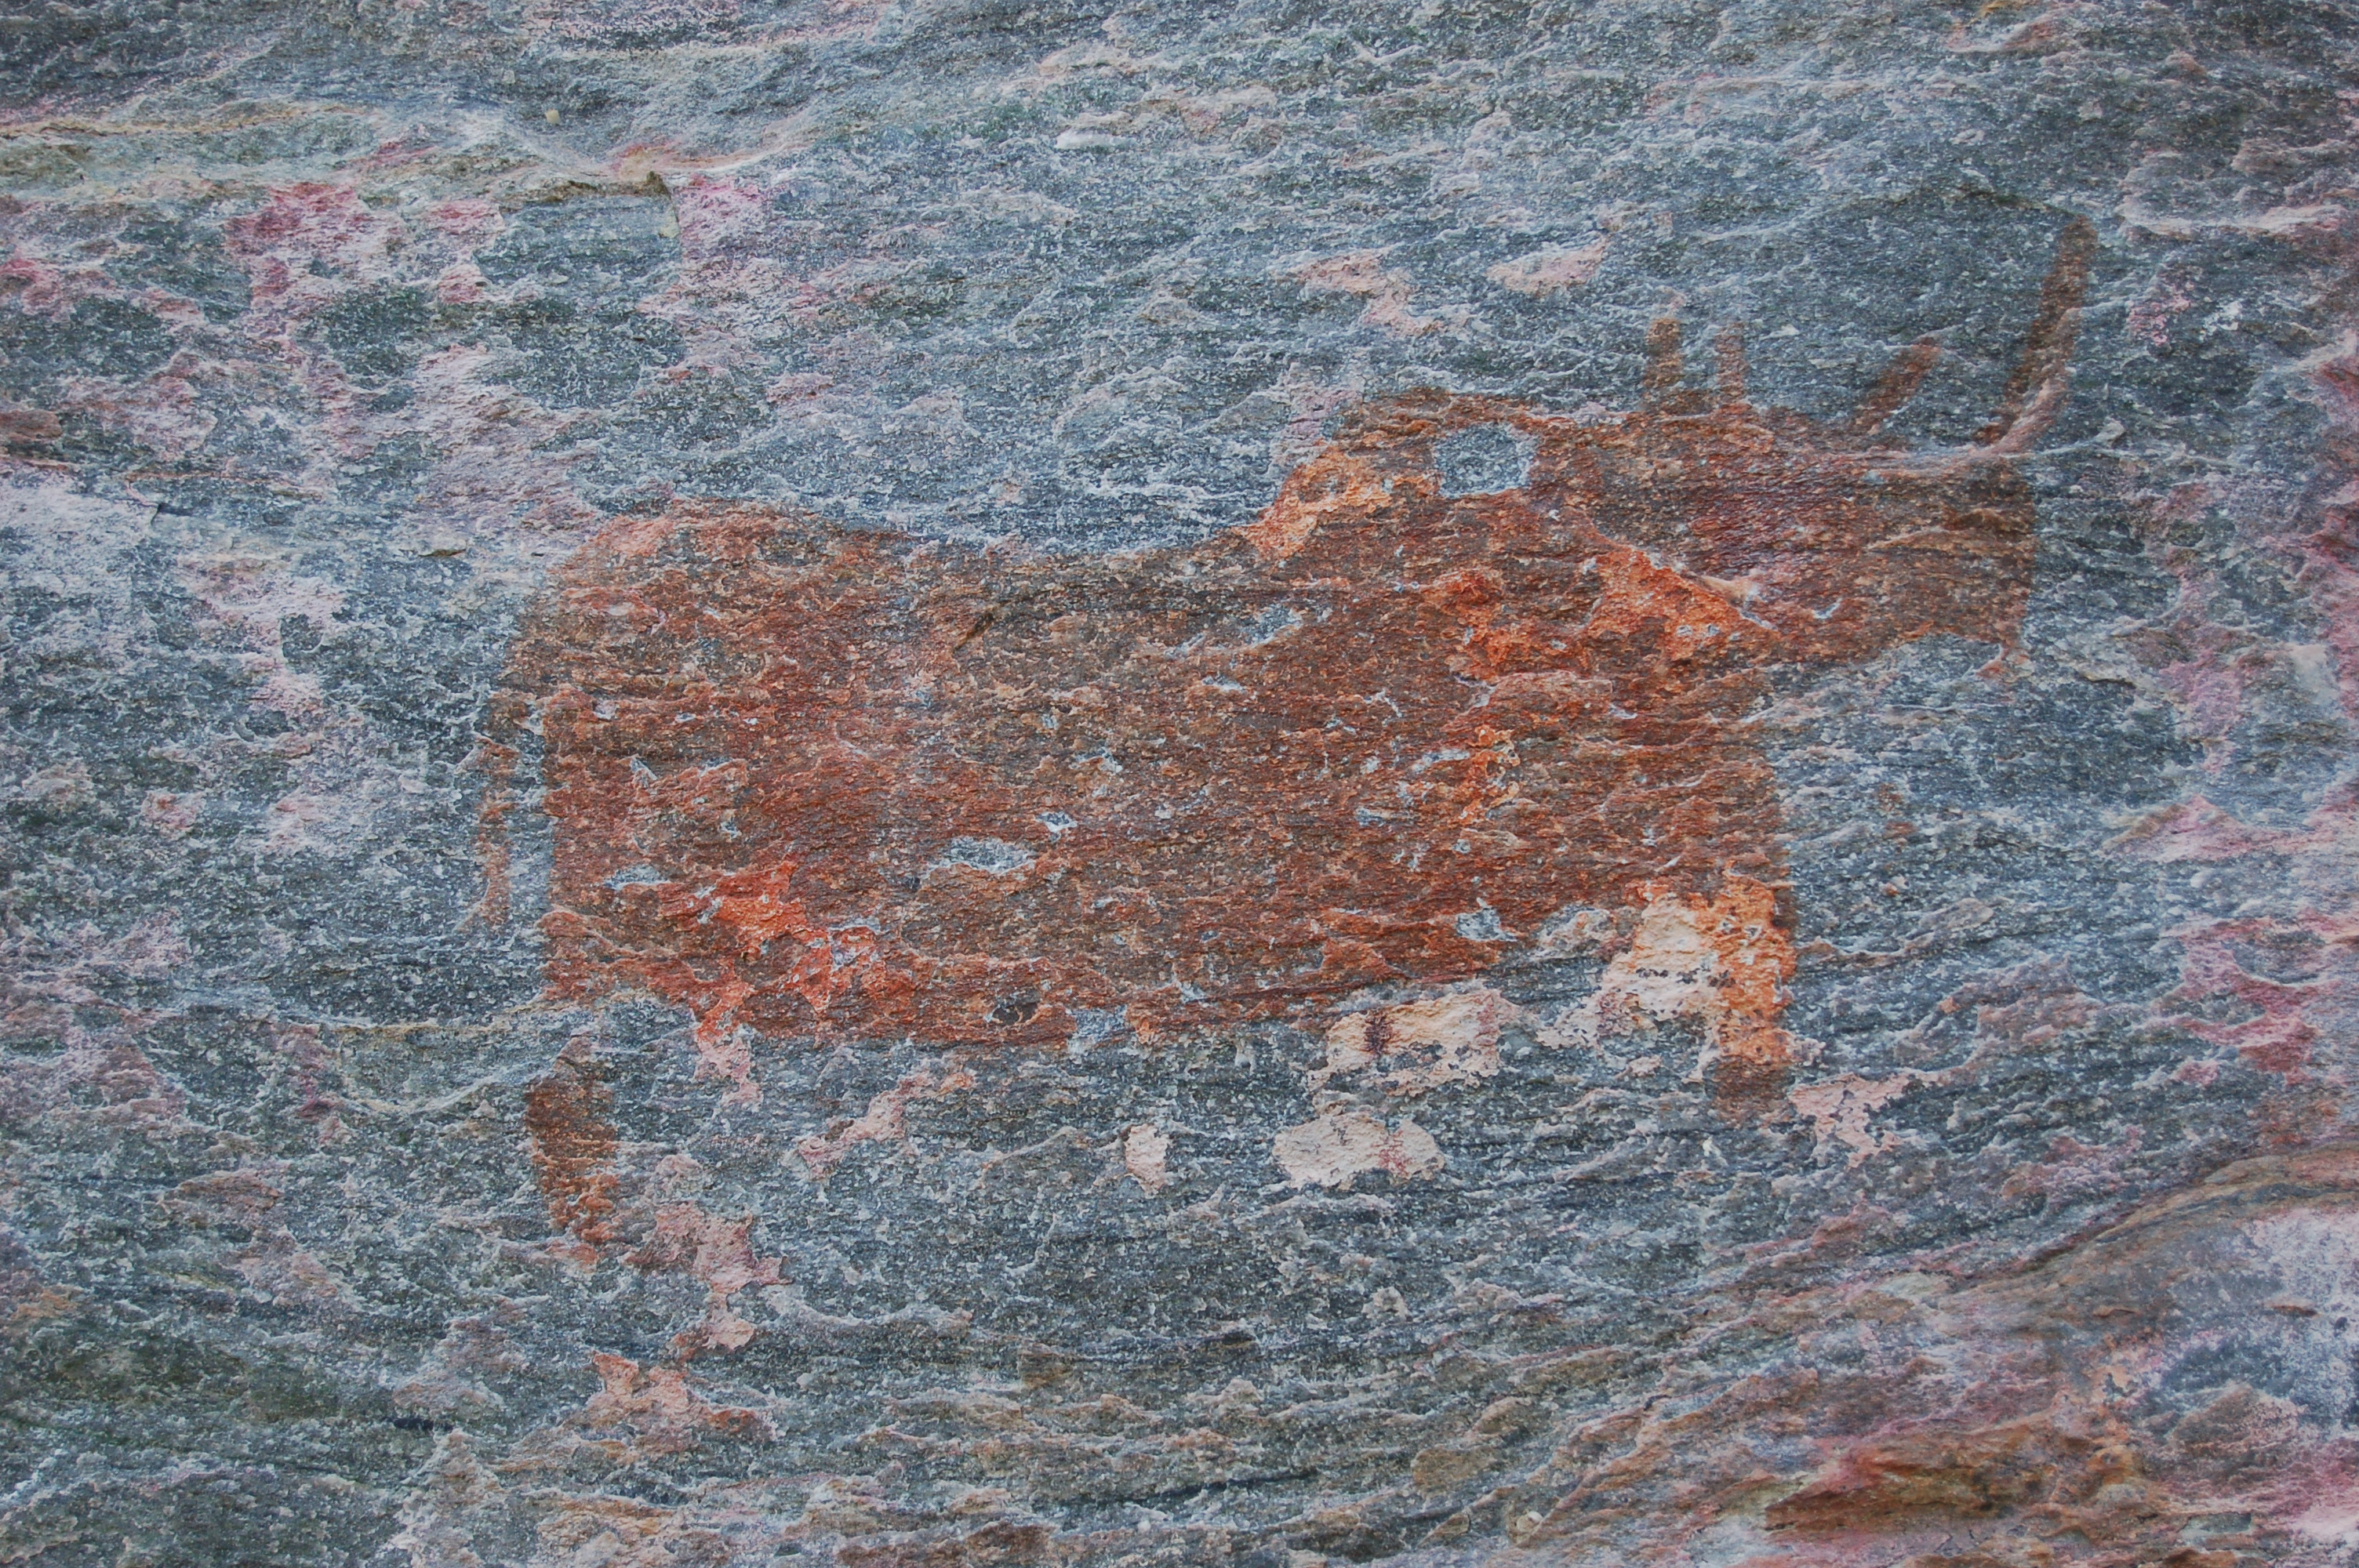 Tsodilo Hills rock paintings1